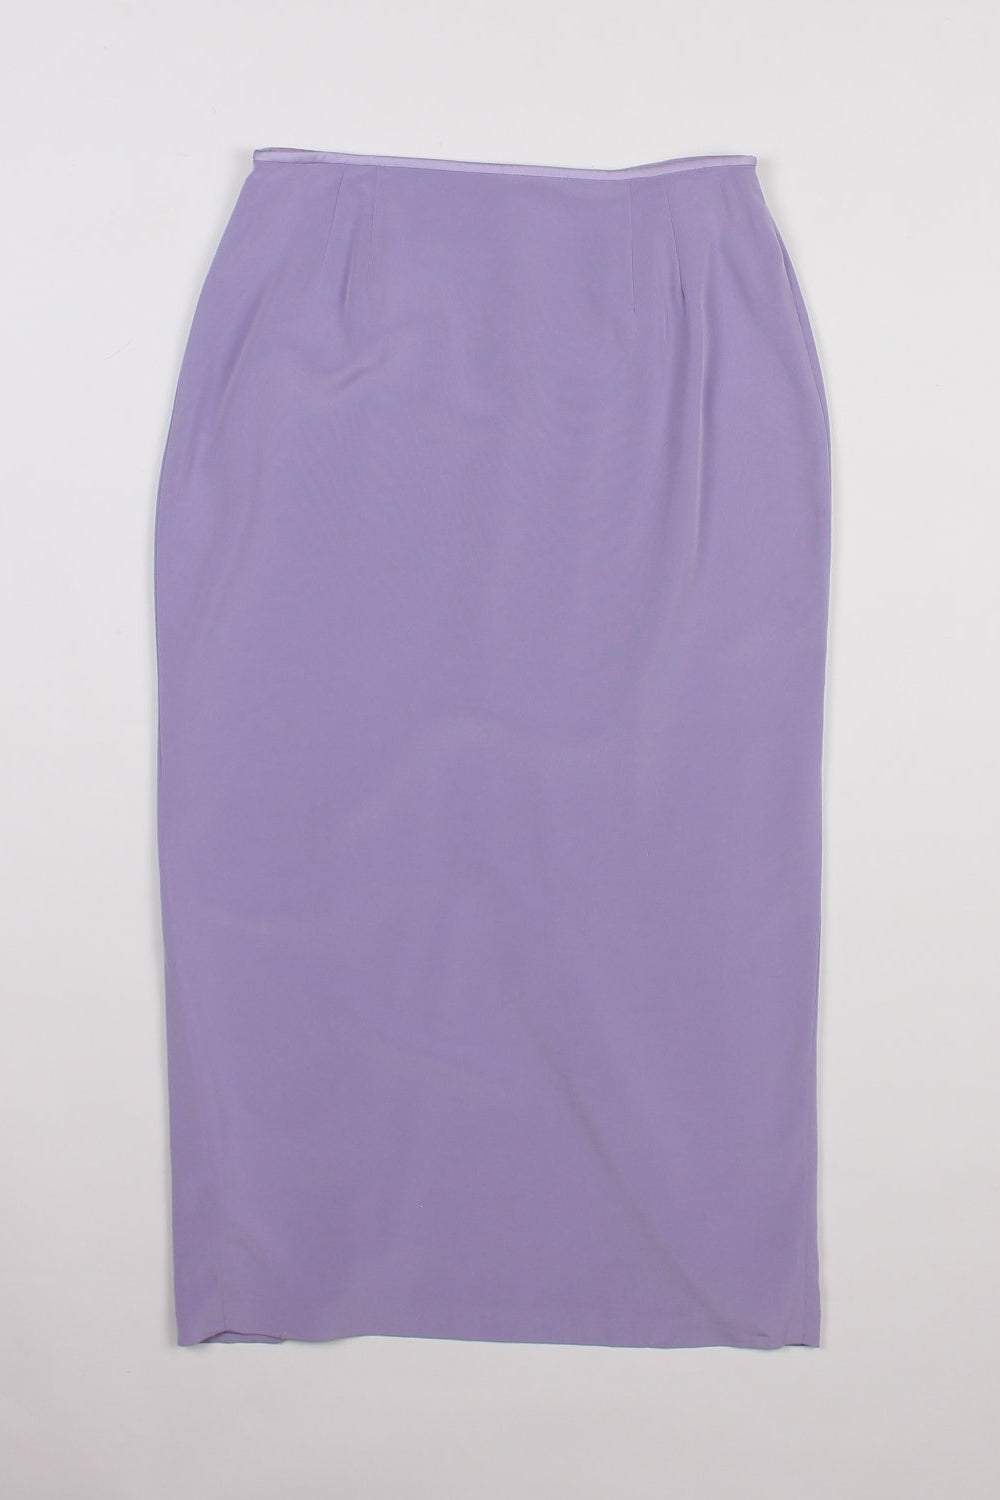 Anthea Crawford Lilac Maxi Skirt 16